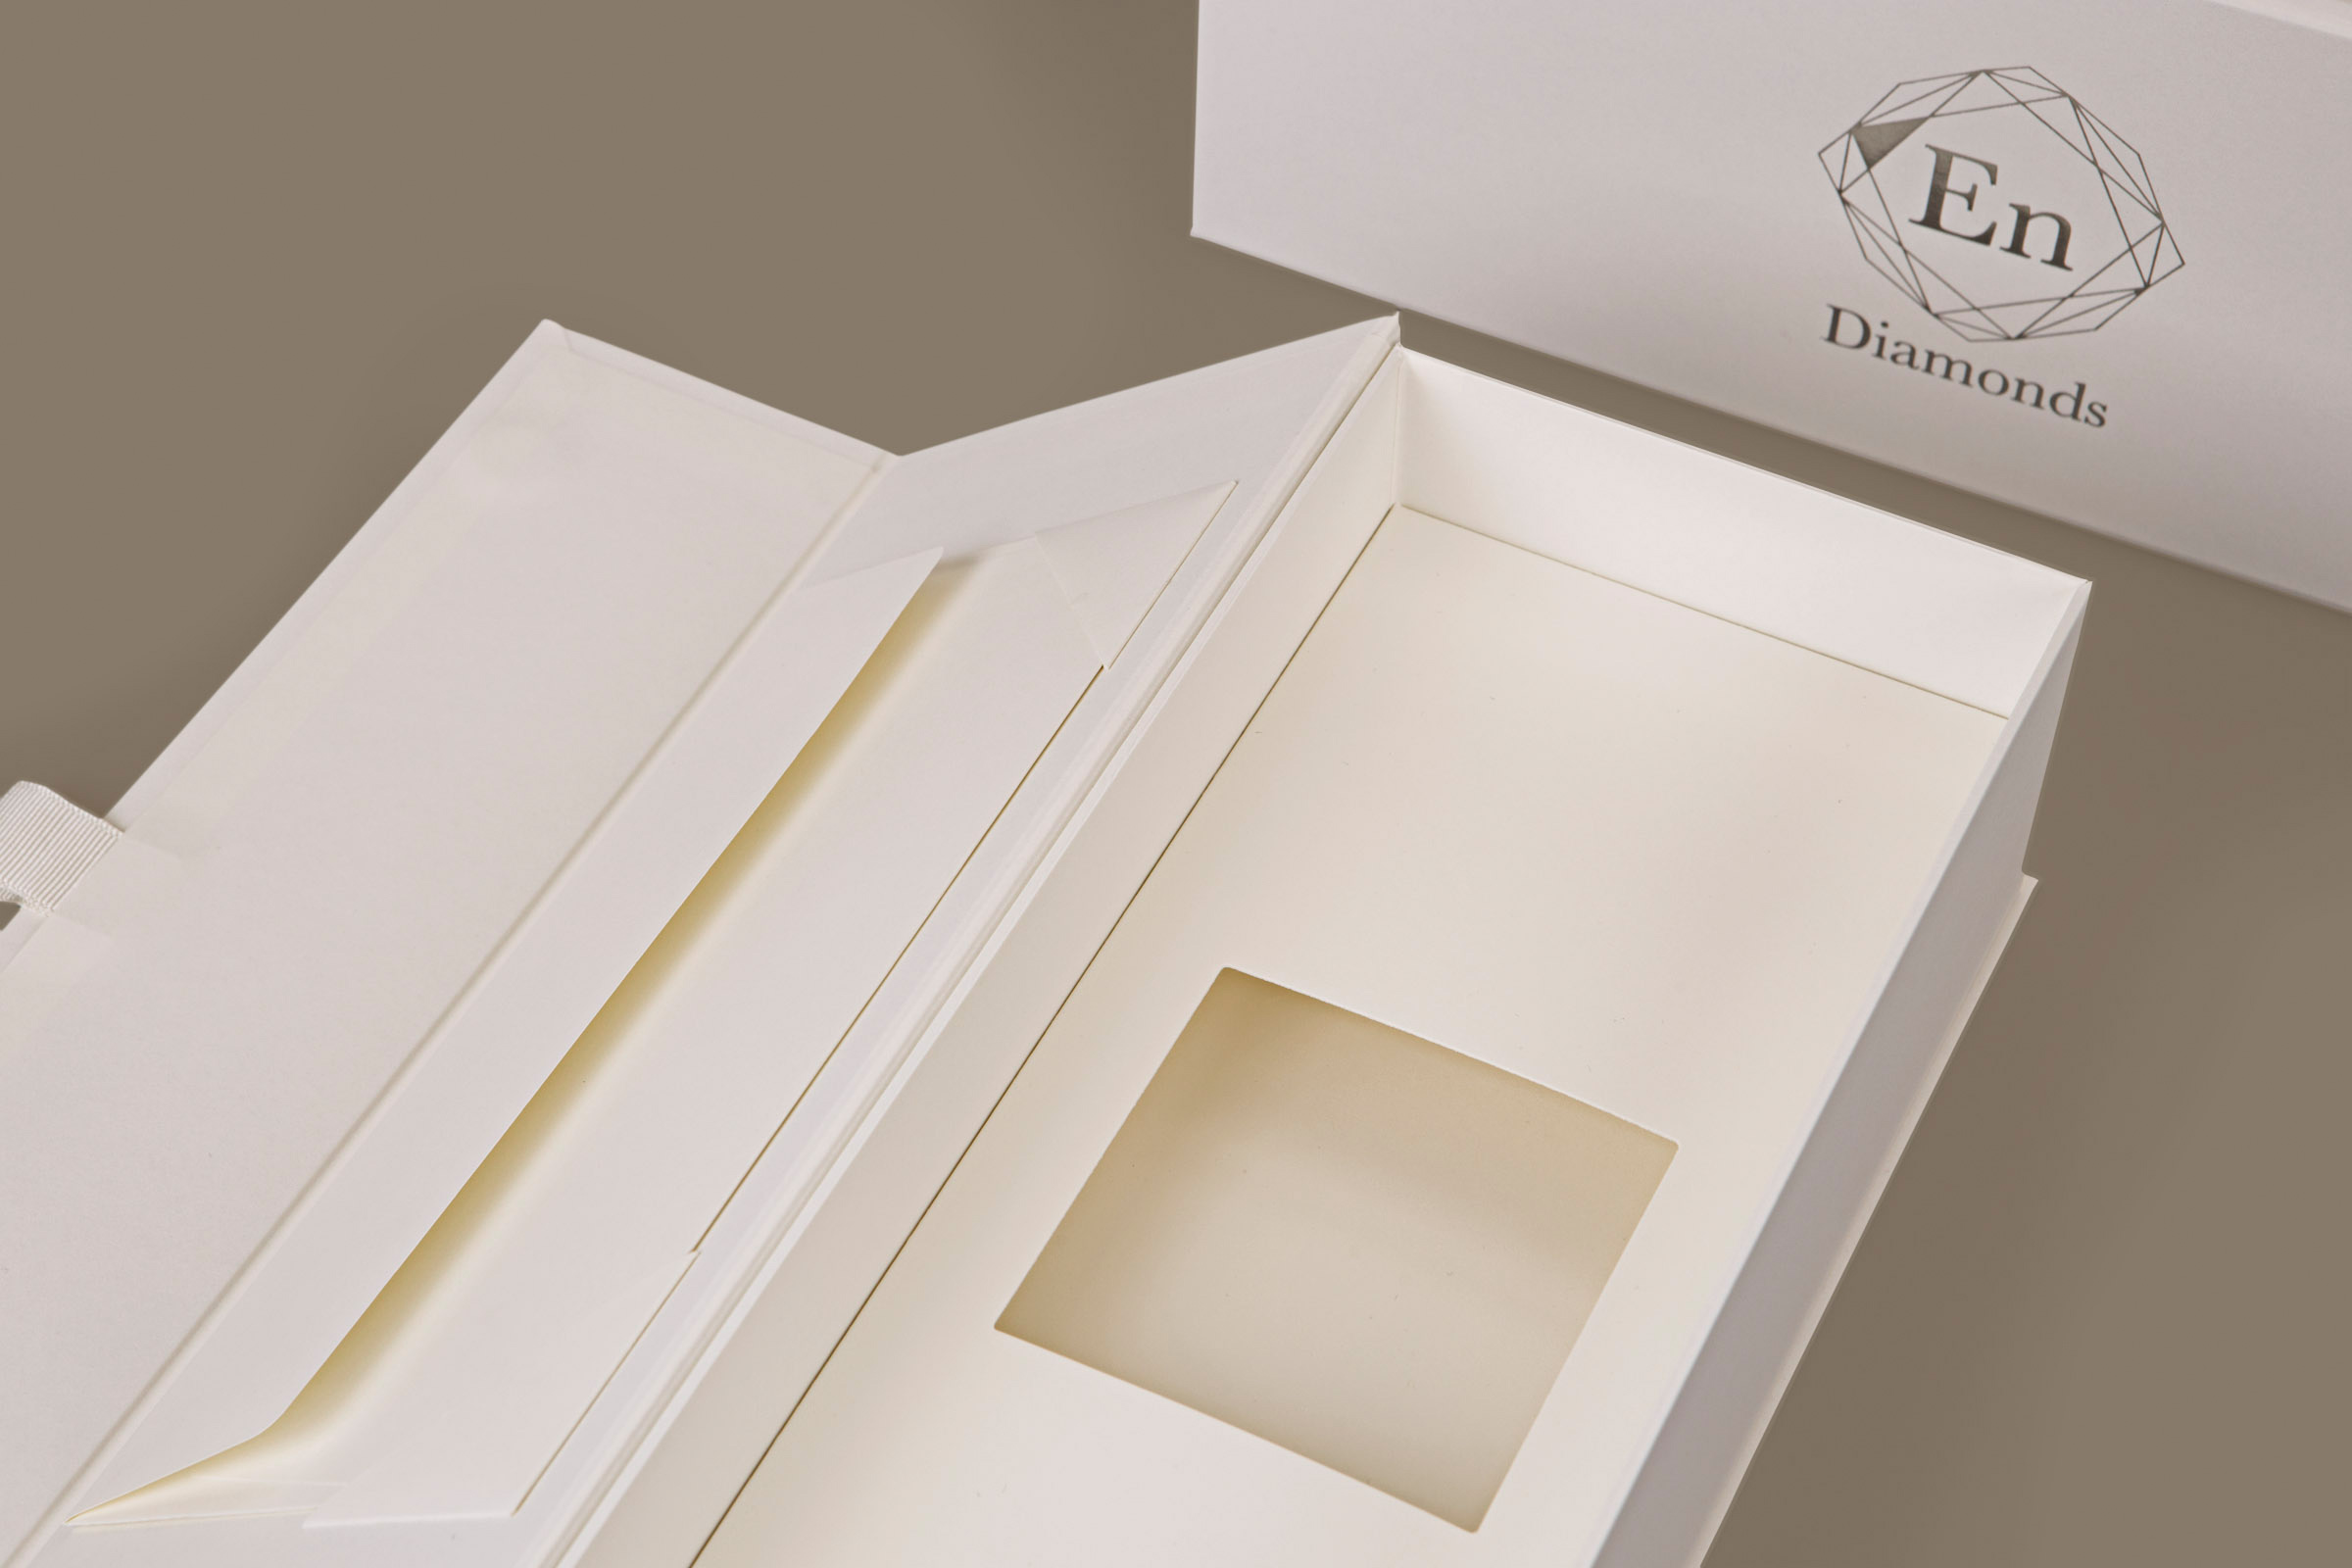 En-Diamonds-Luxury-E-commerce-Jewellery-box